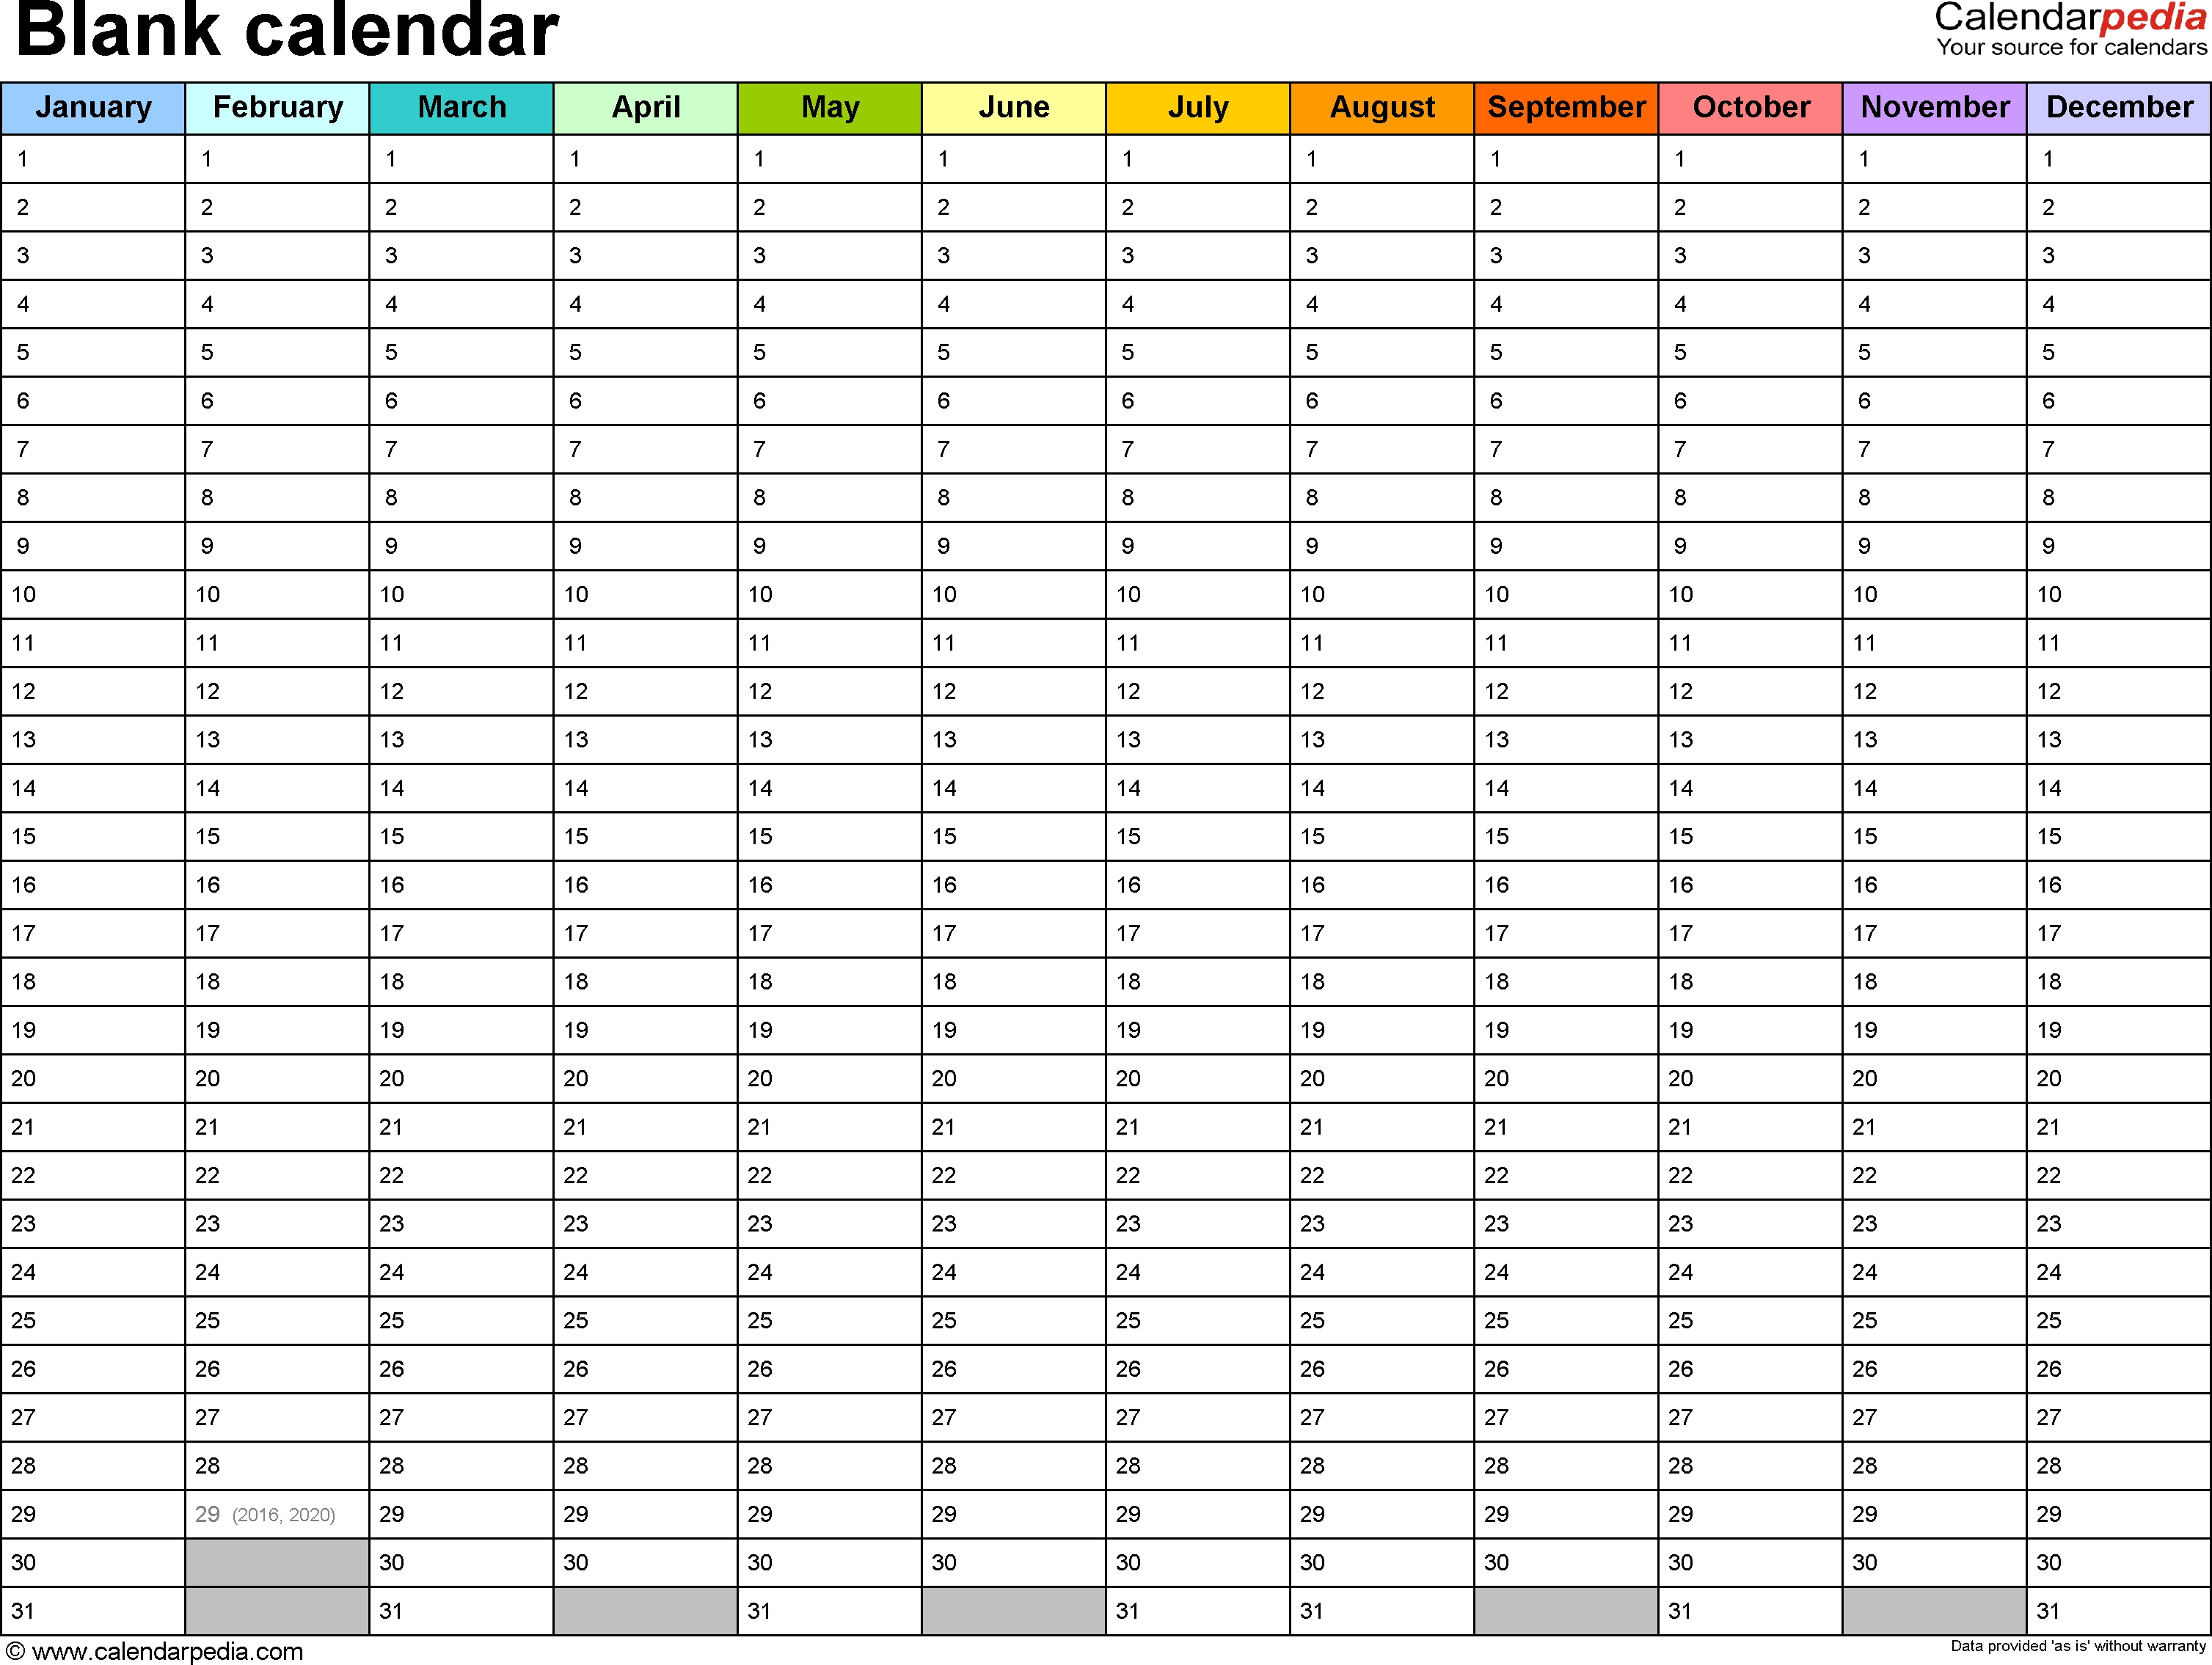 Blank Calendar - 9 Free Printable Microsoft Word Templates  Template For Year At A Glance Calendar